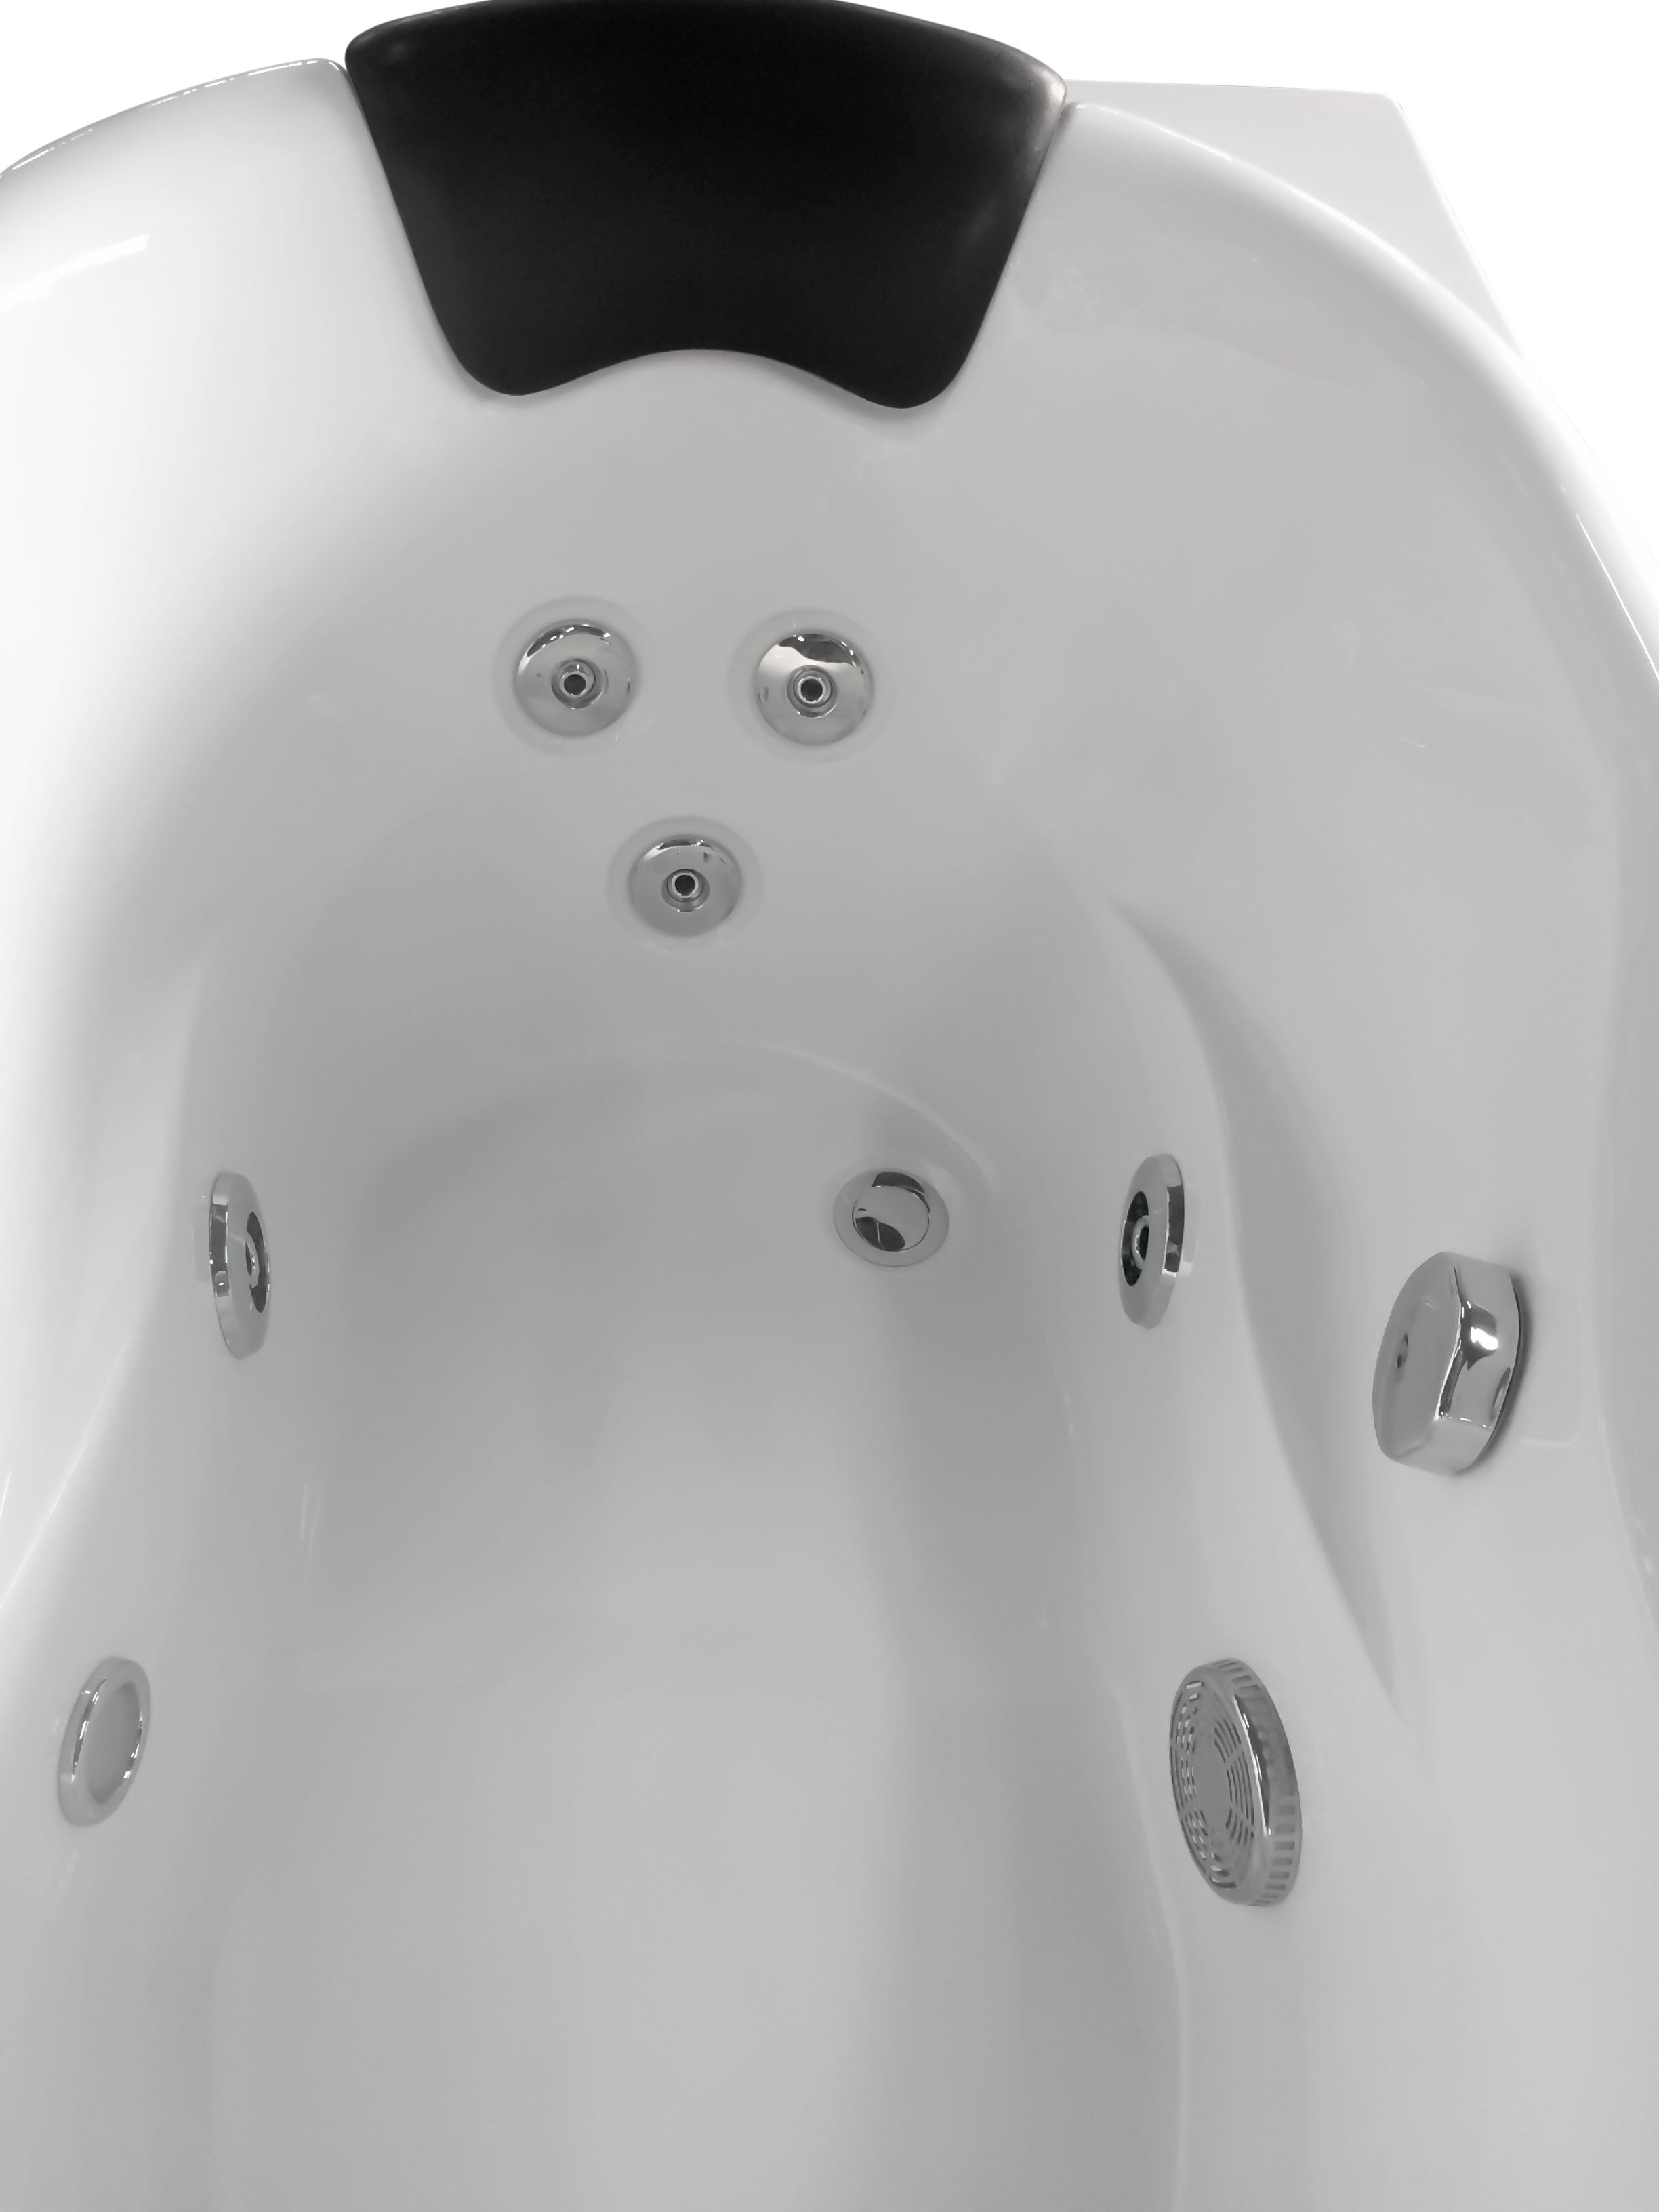 EAGO AM175 Corner Whirlpool Bathtub White Acrylic Jetted w/ Fixtures